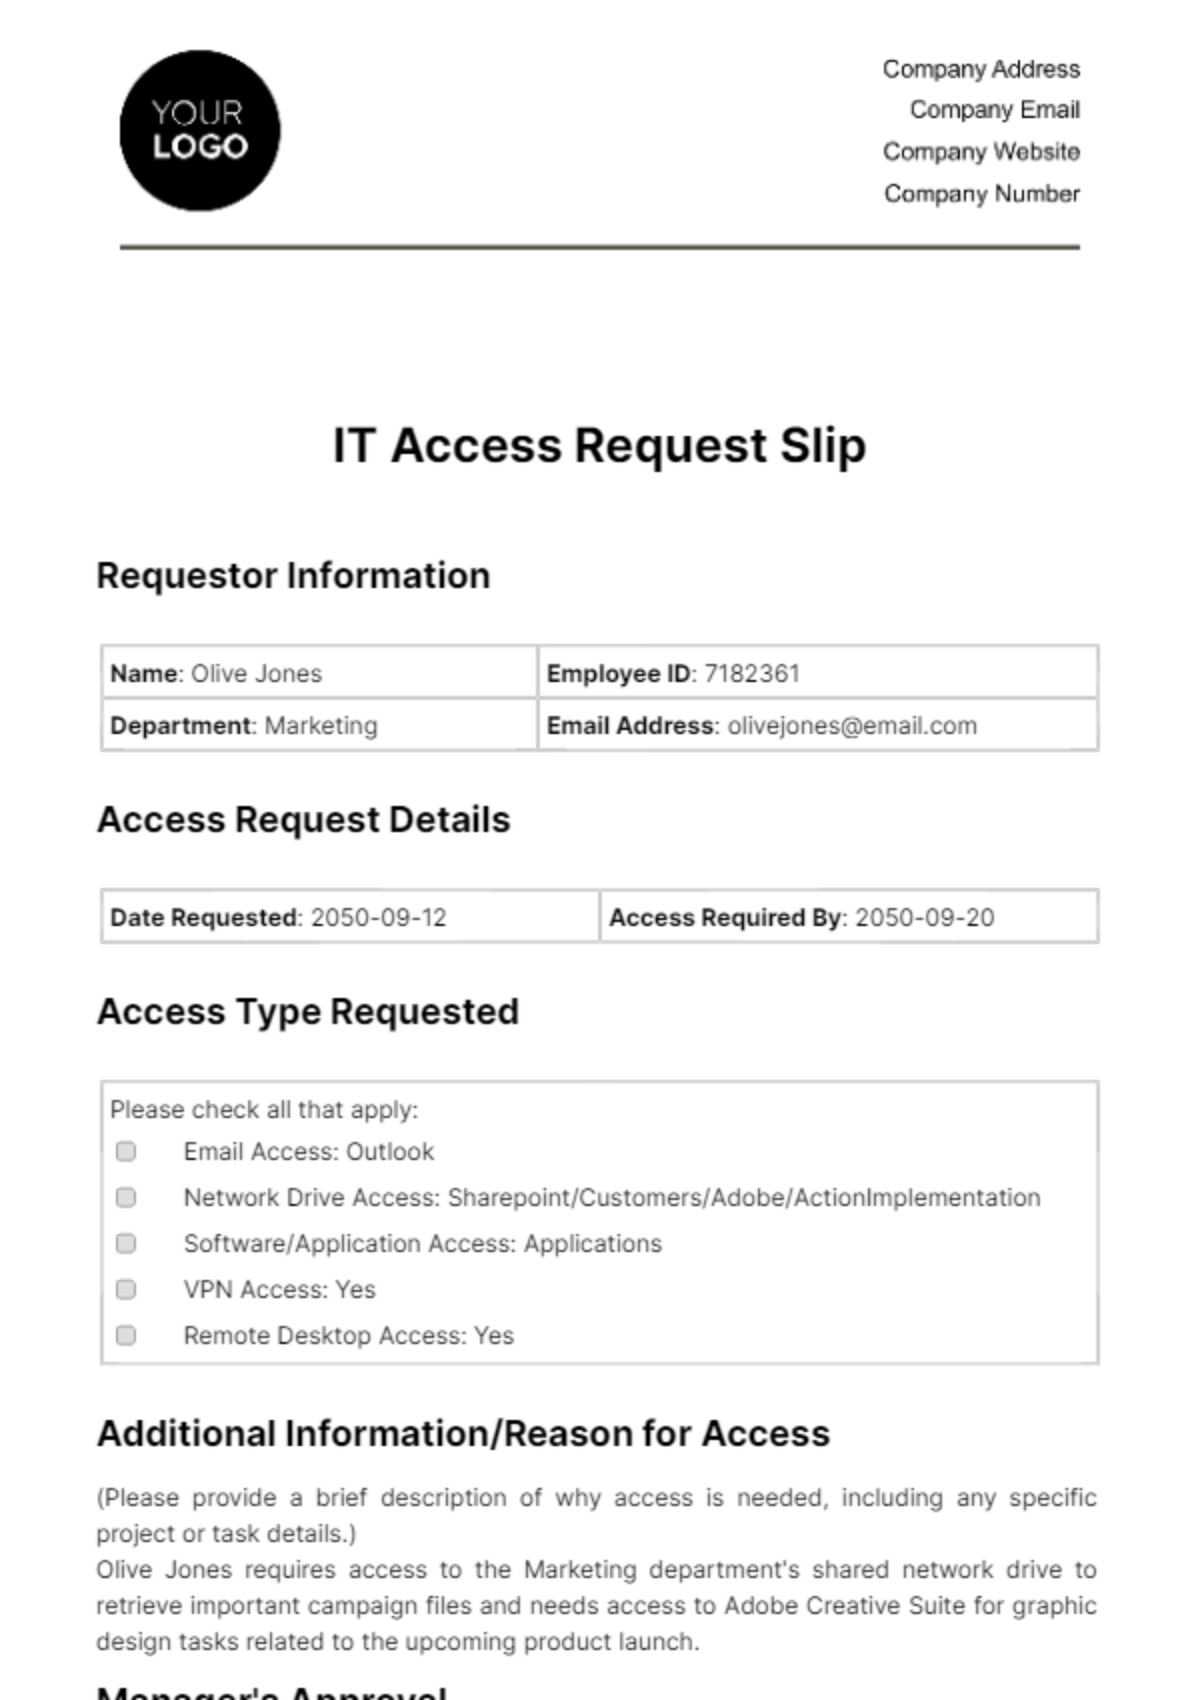 IT Access Request Slip HR Template